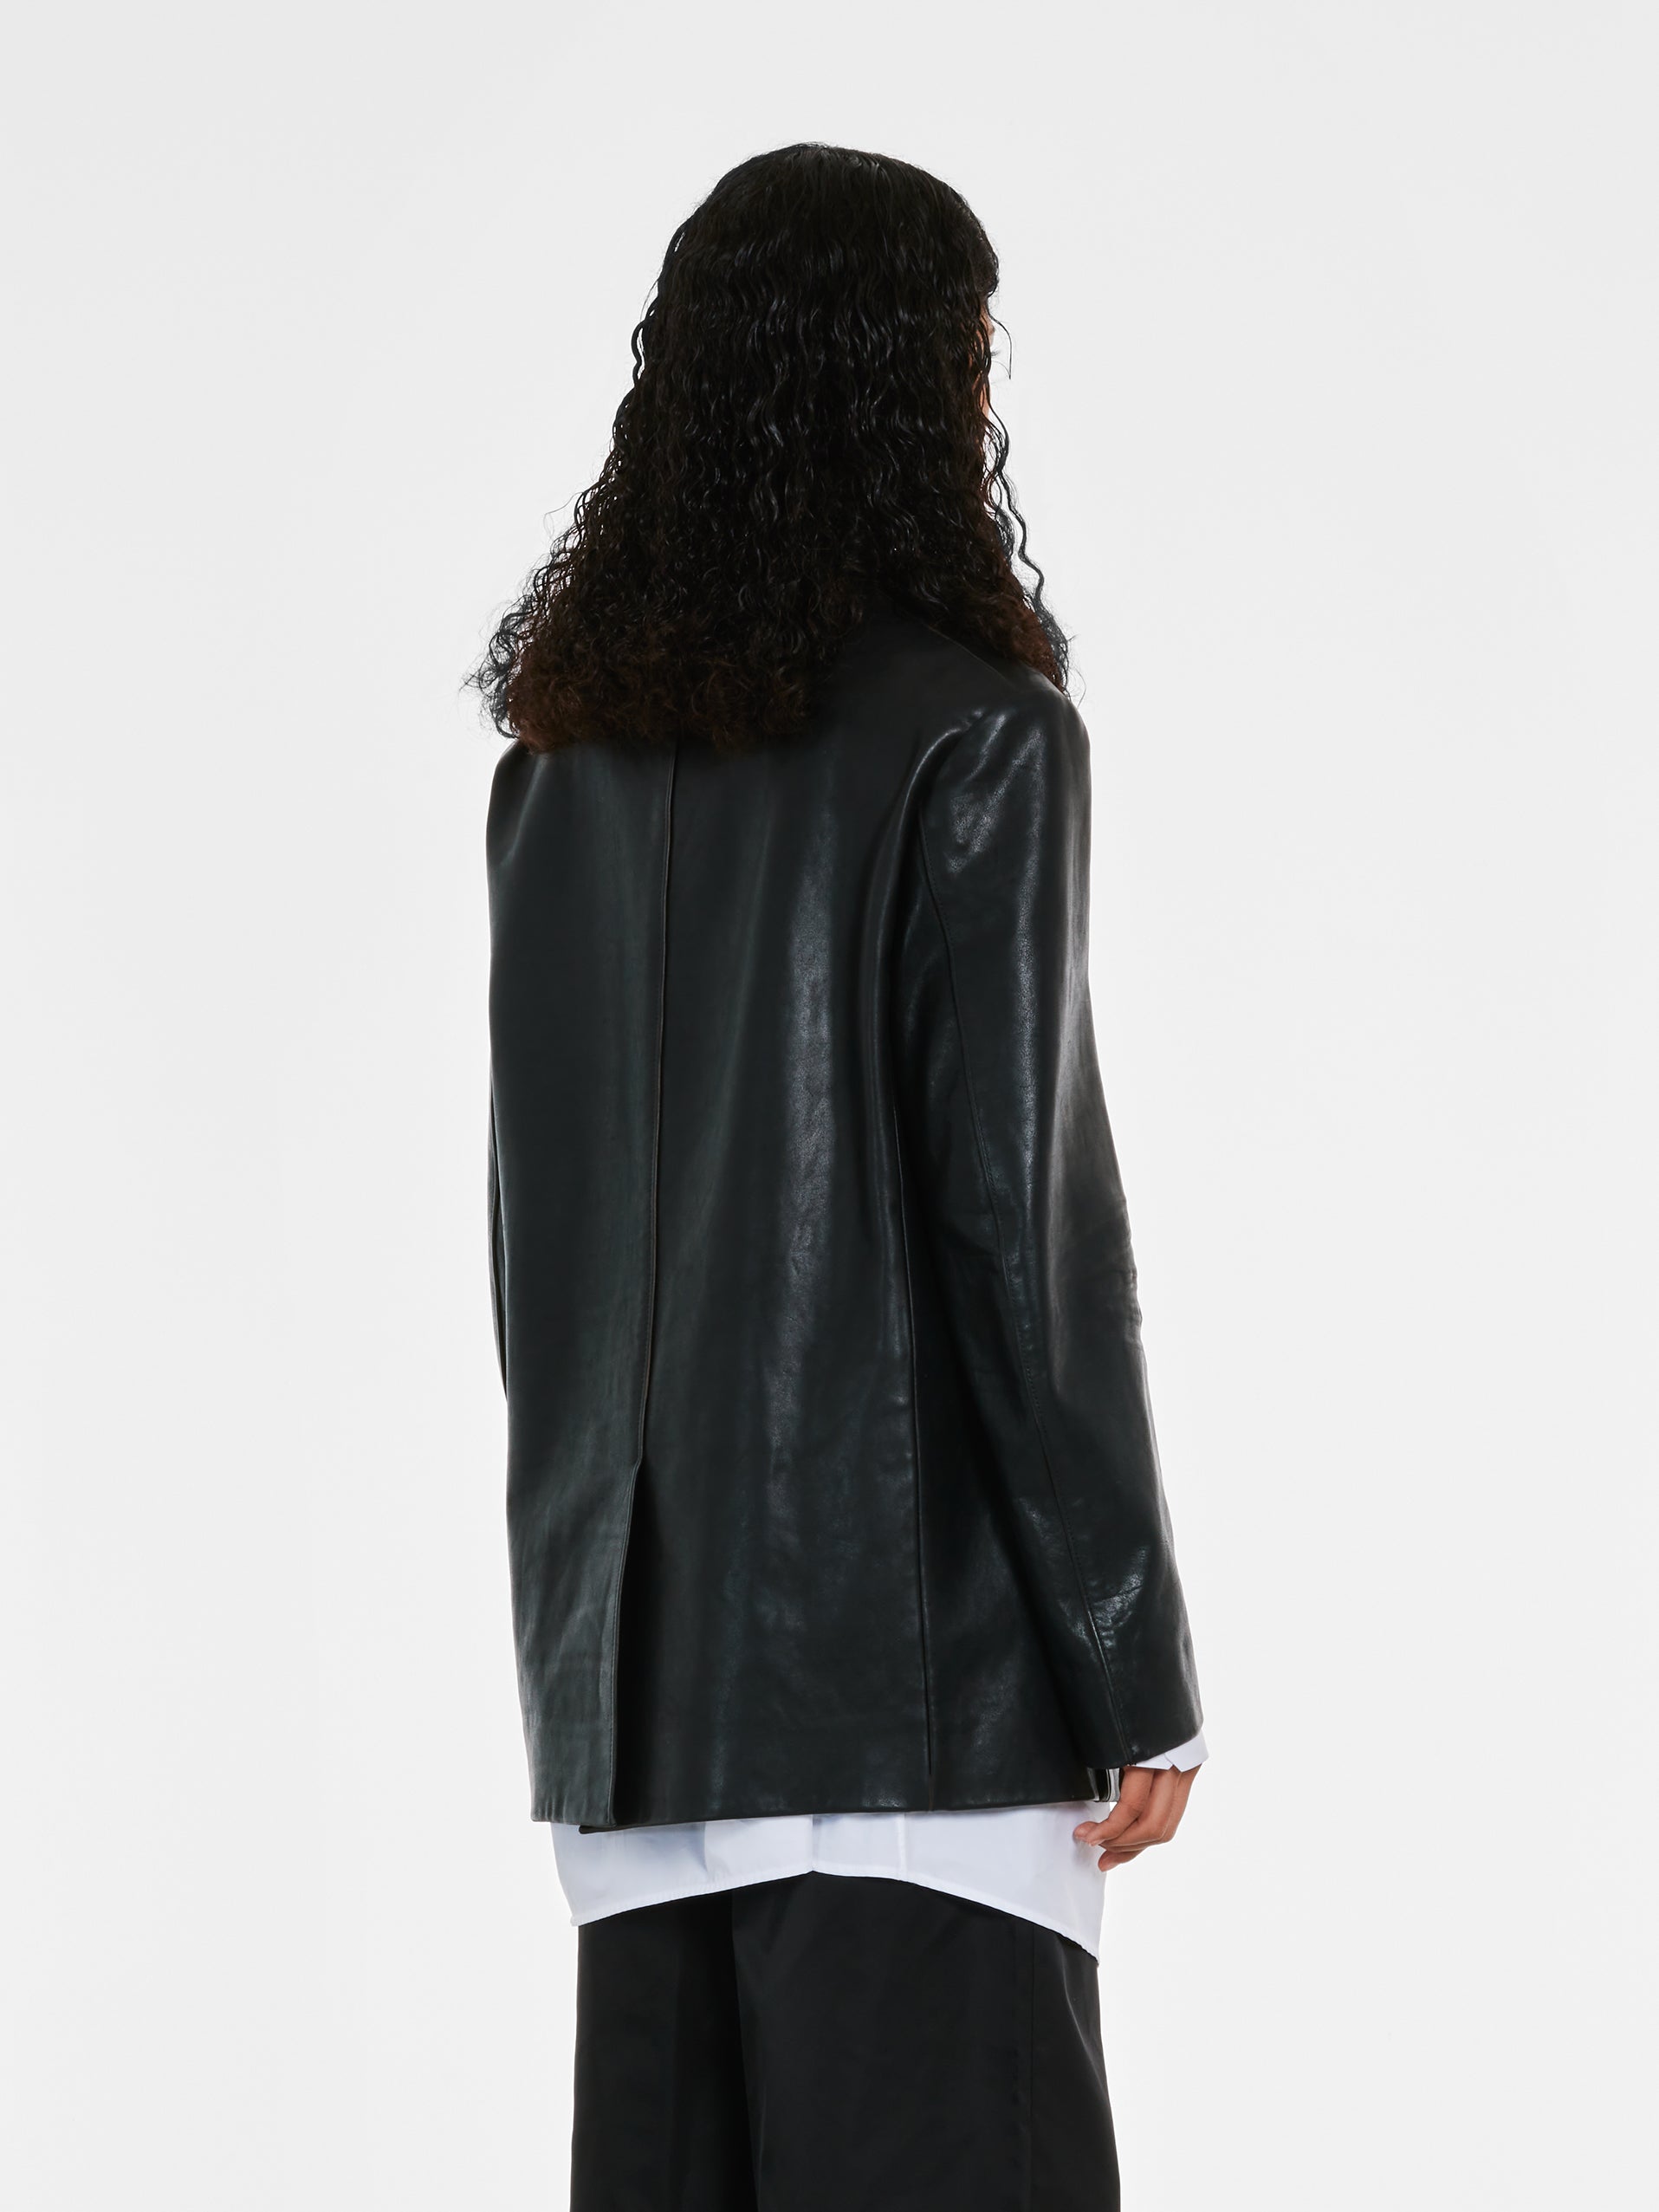 Prada - Women’s Leather Jacket - (Black) view 3